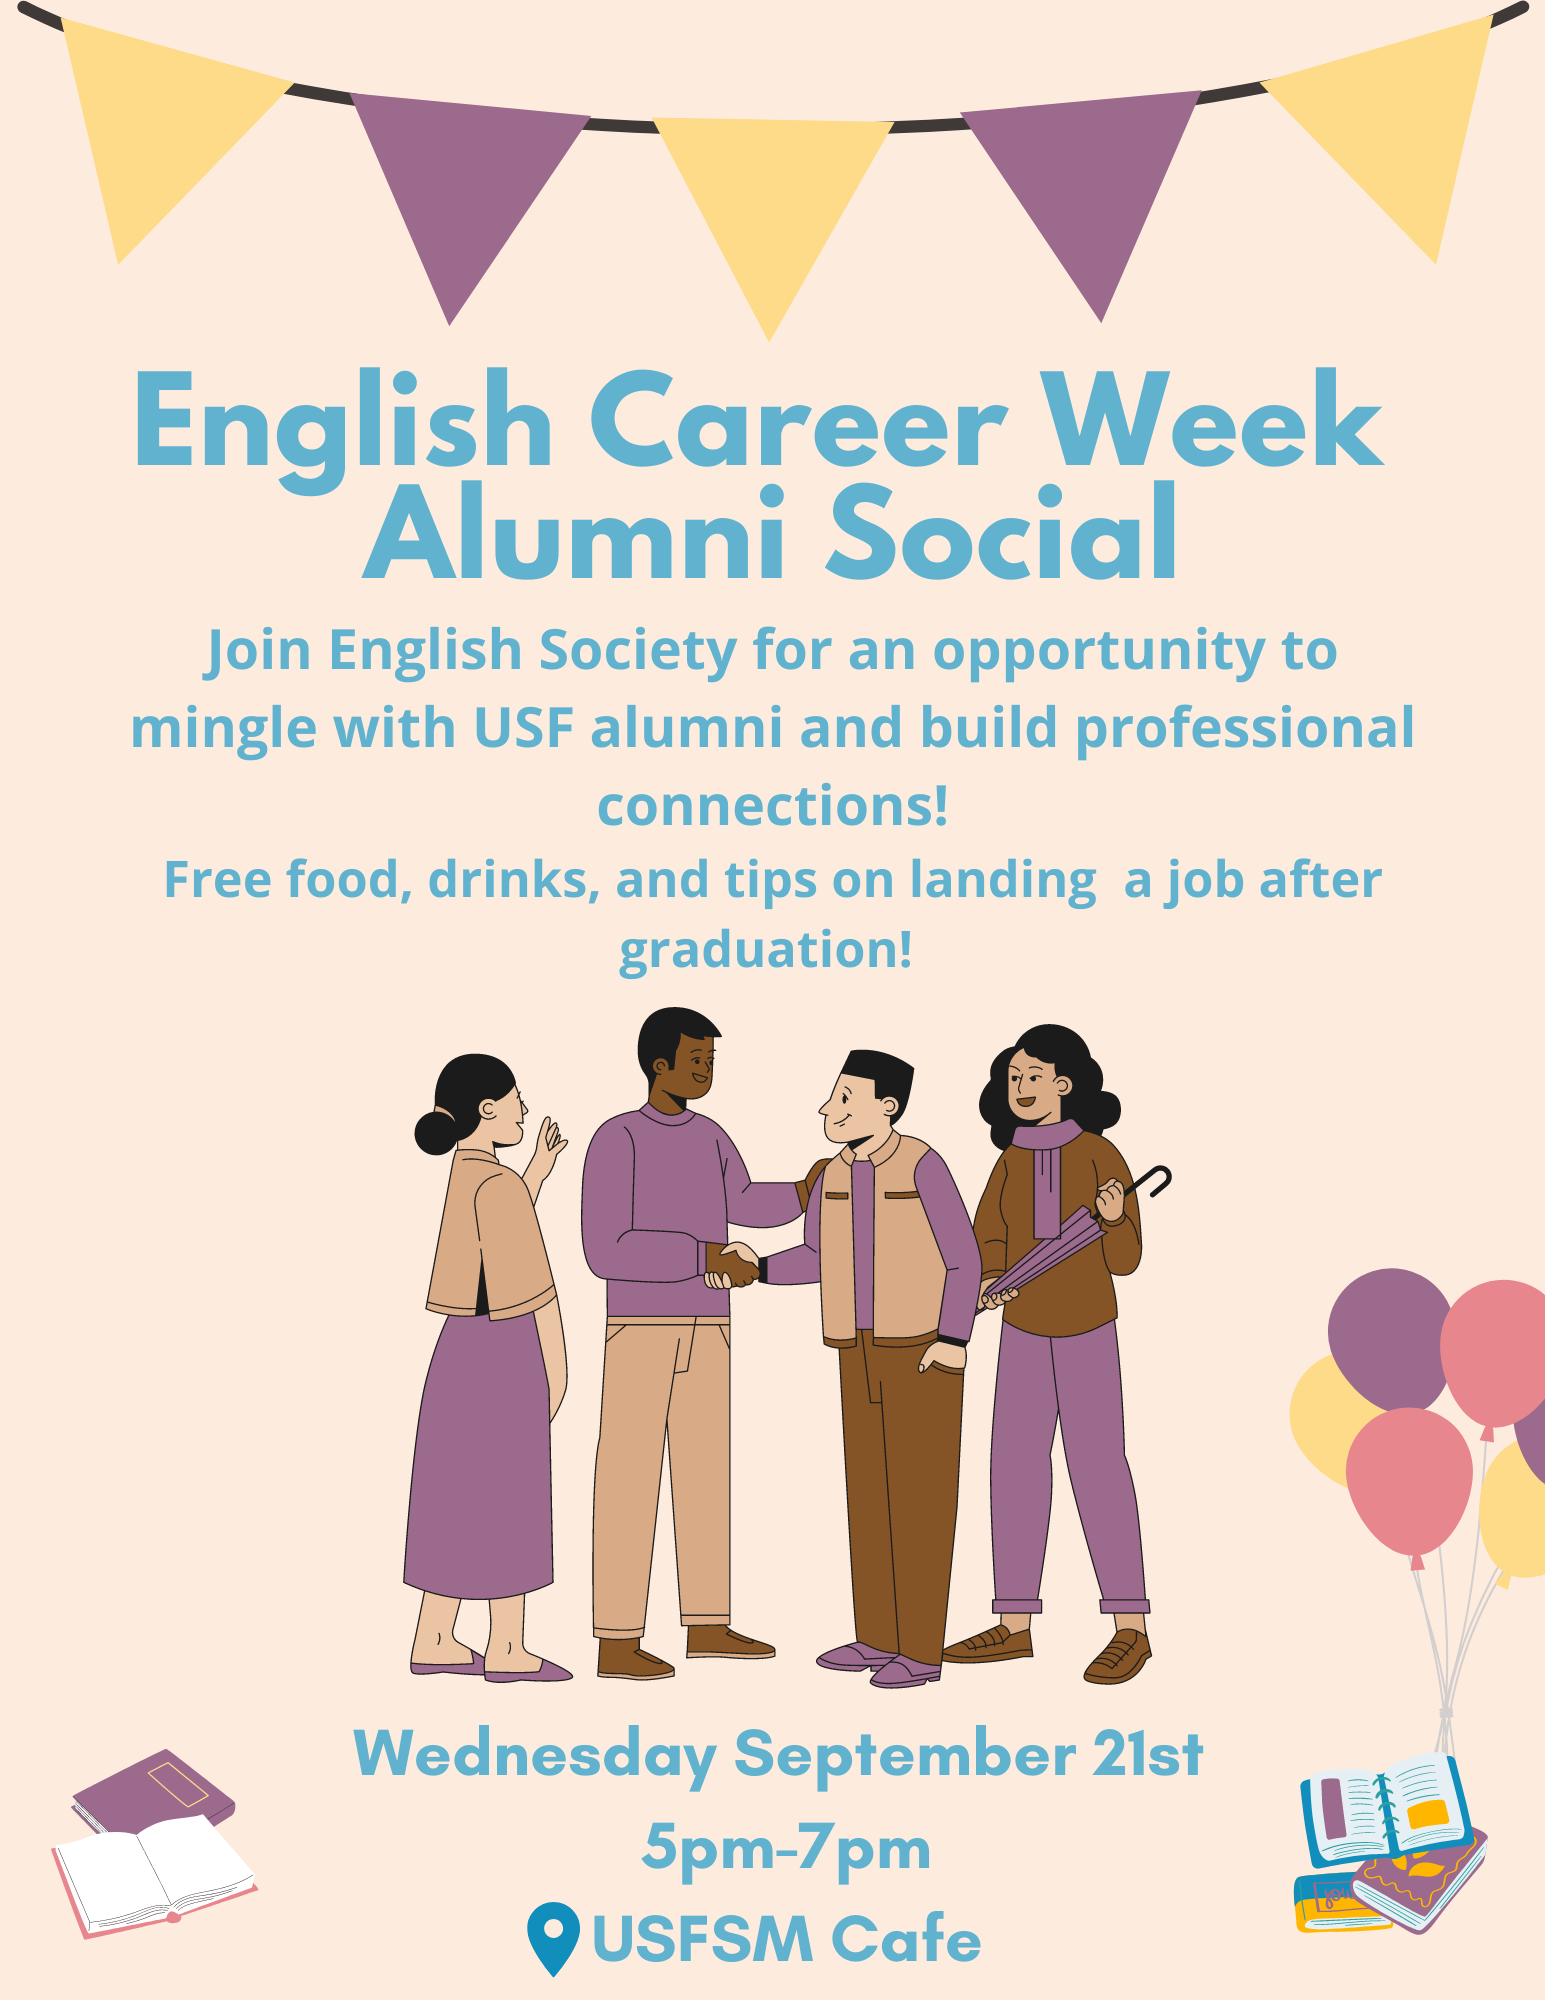 English Career Week Alumni Social | USFSM Cafe, 5-7 pm